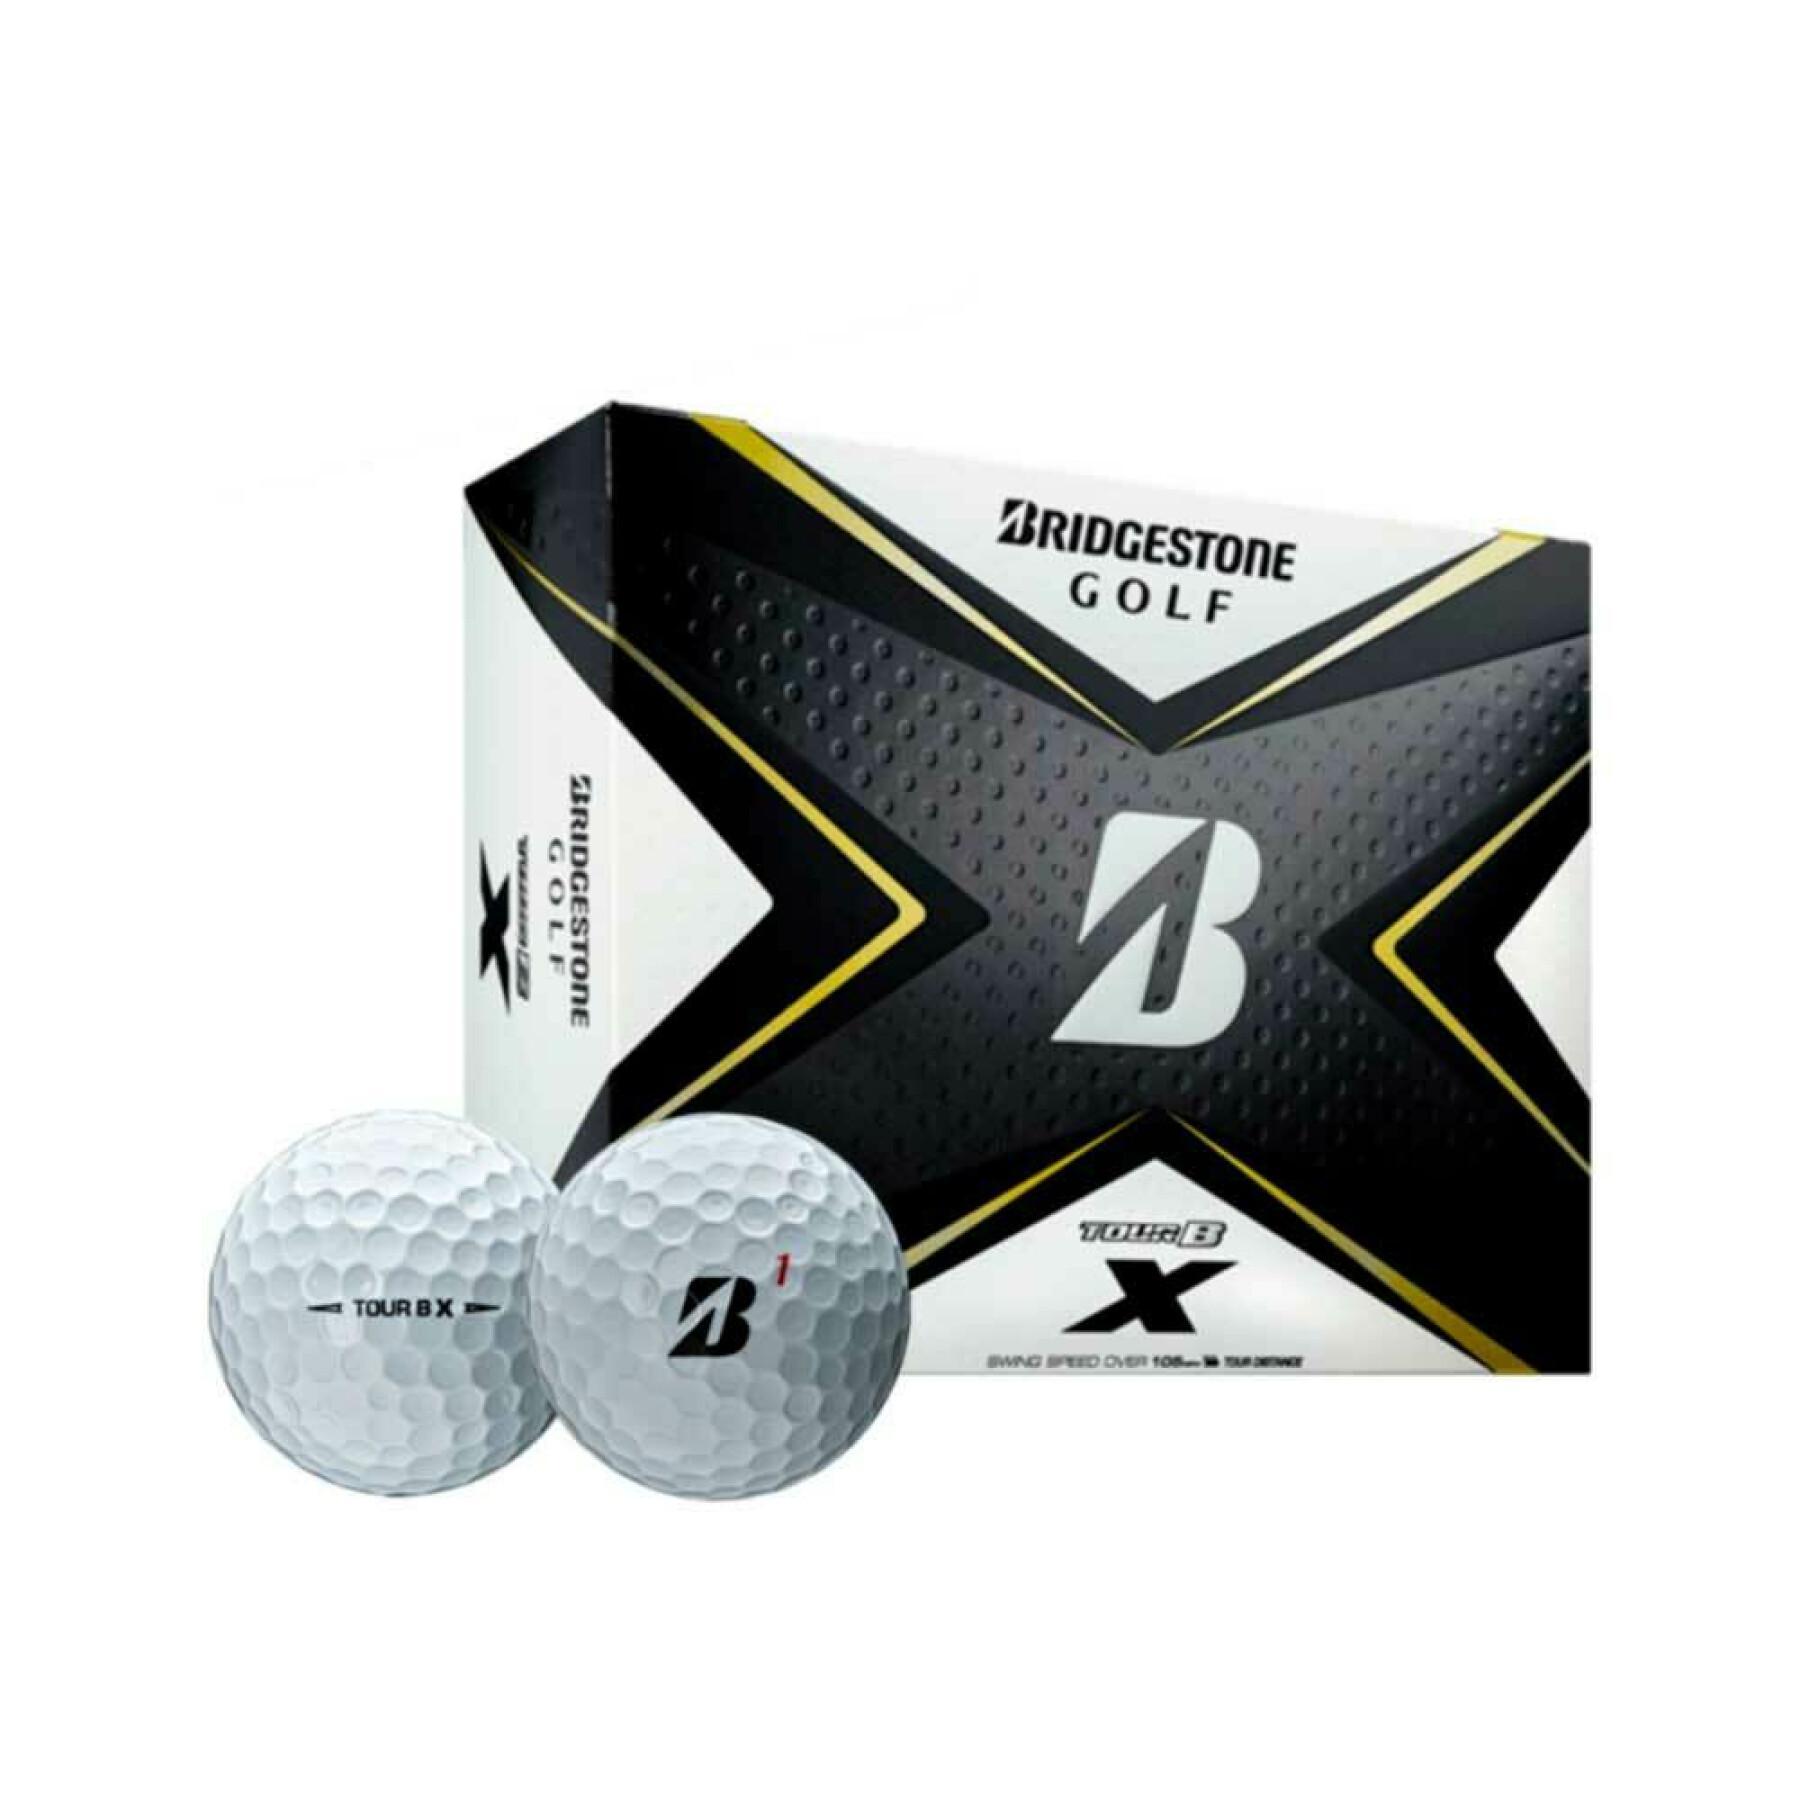 Golf balls Bridgestone Tour B X